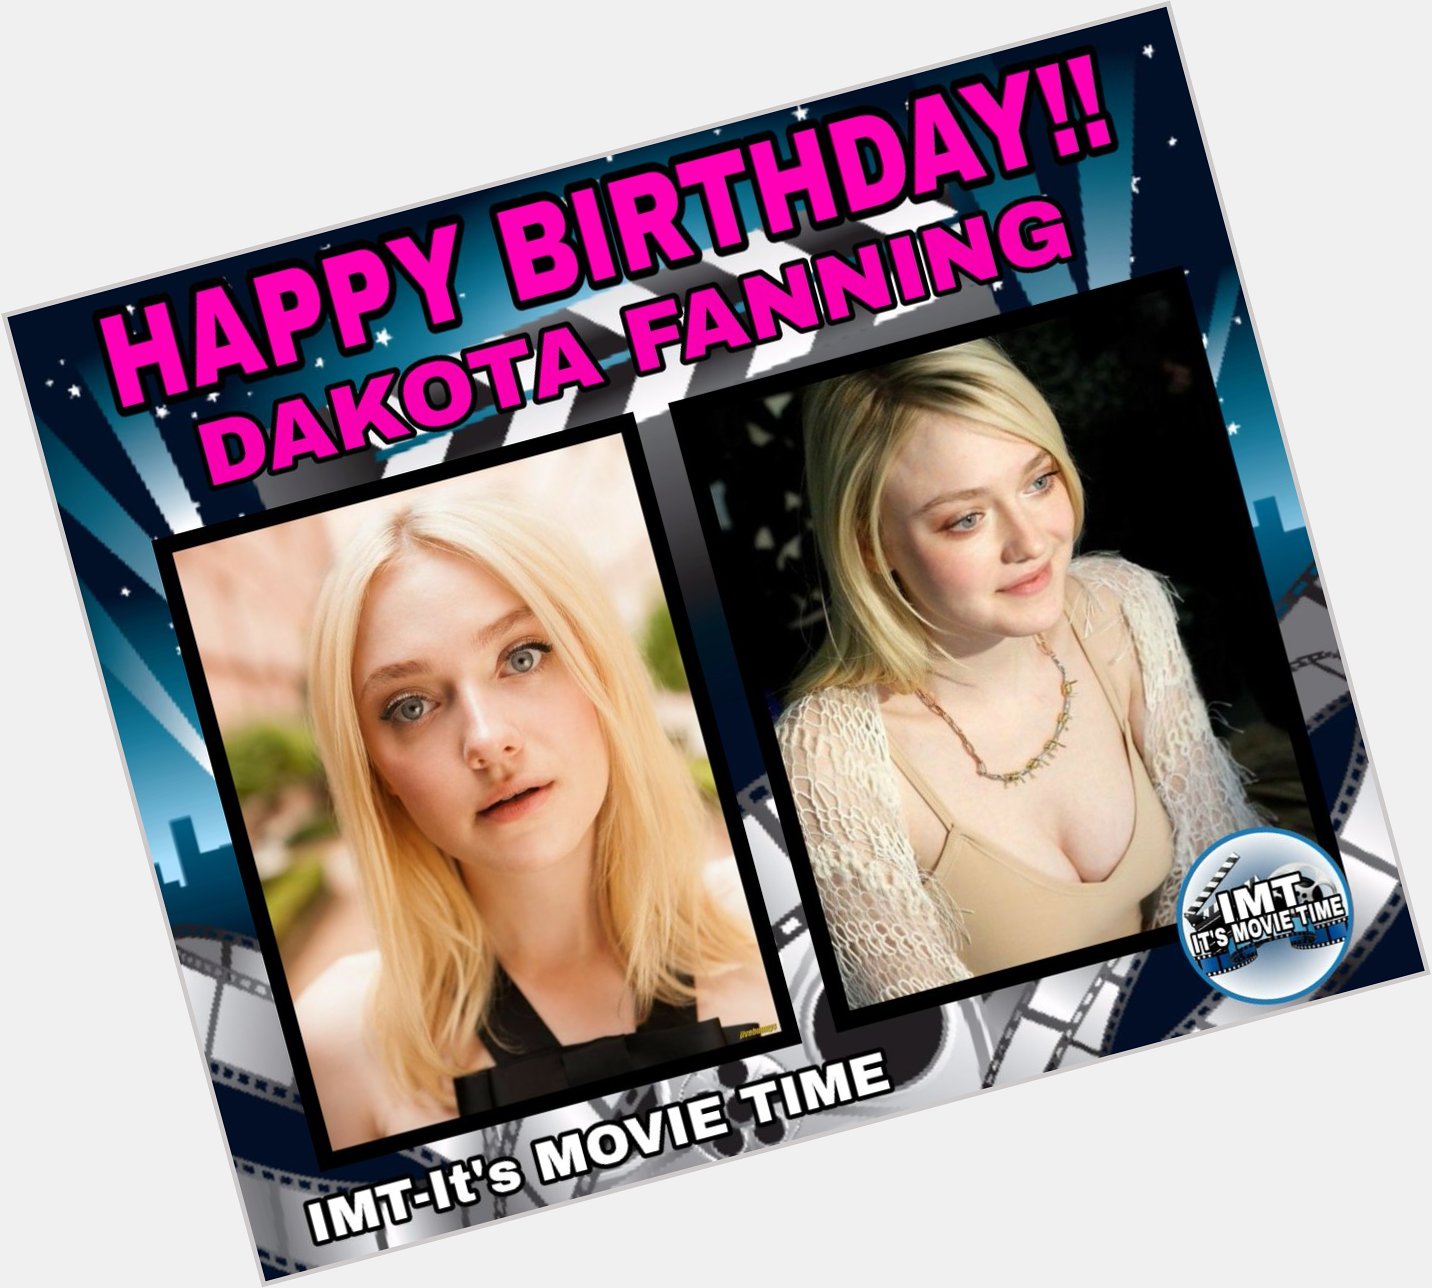 Happy Birthday to the Beautiful Dakota Fanning! The actress is celebrating 26 years 